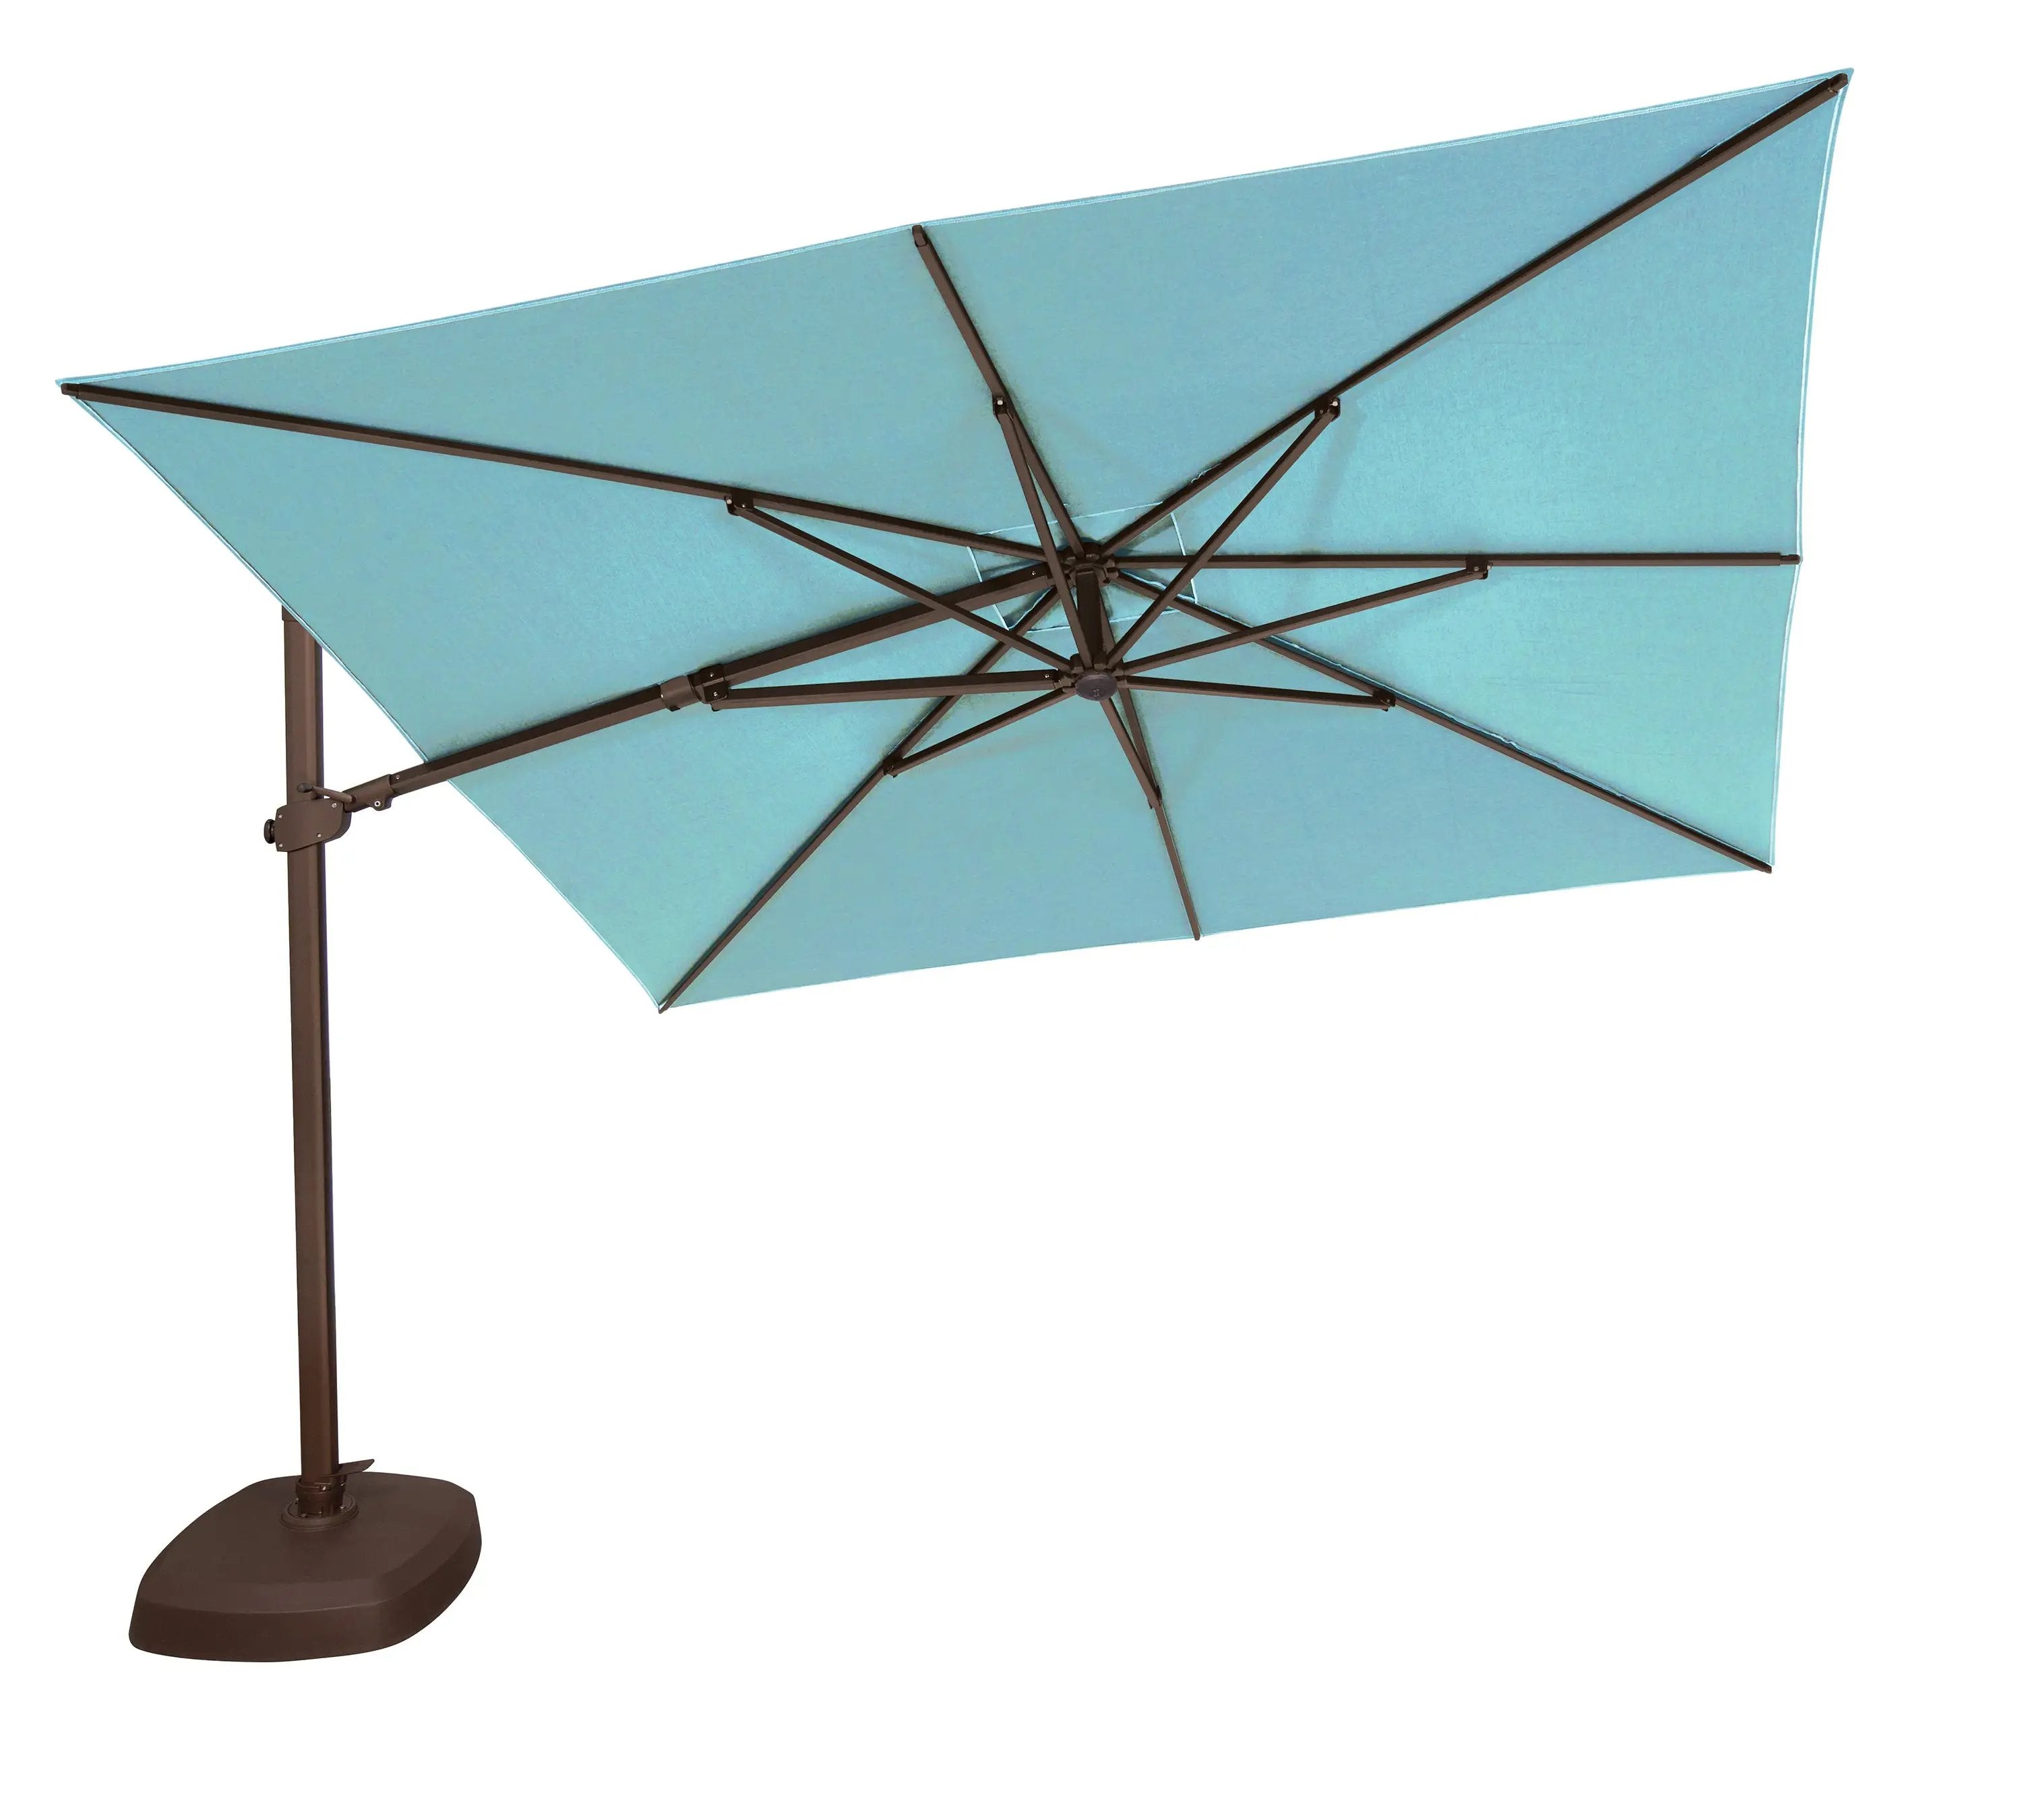  Cantilever Umbrella Frame